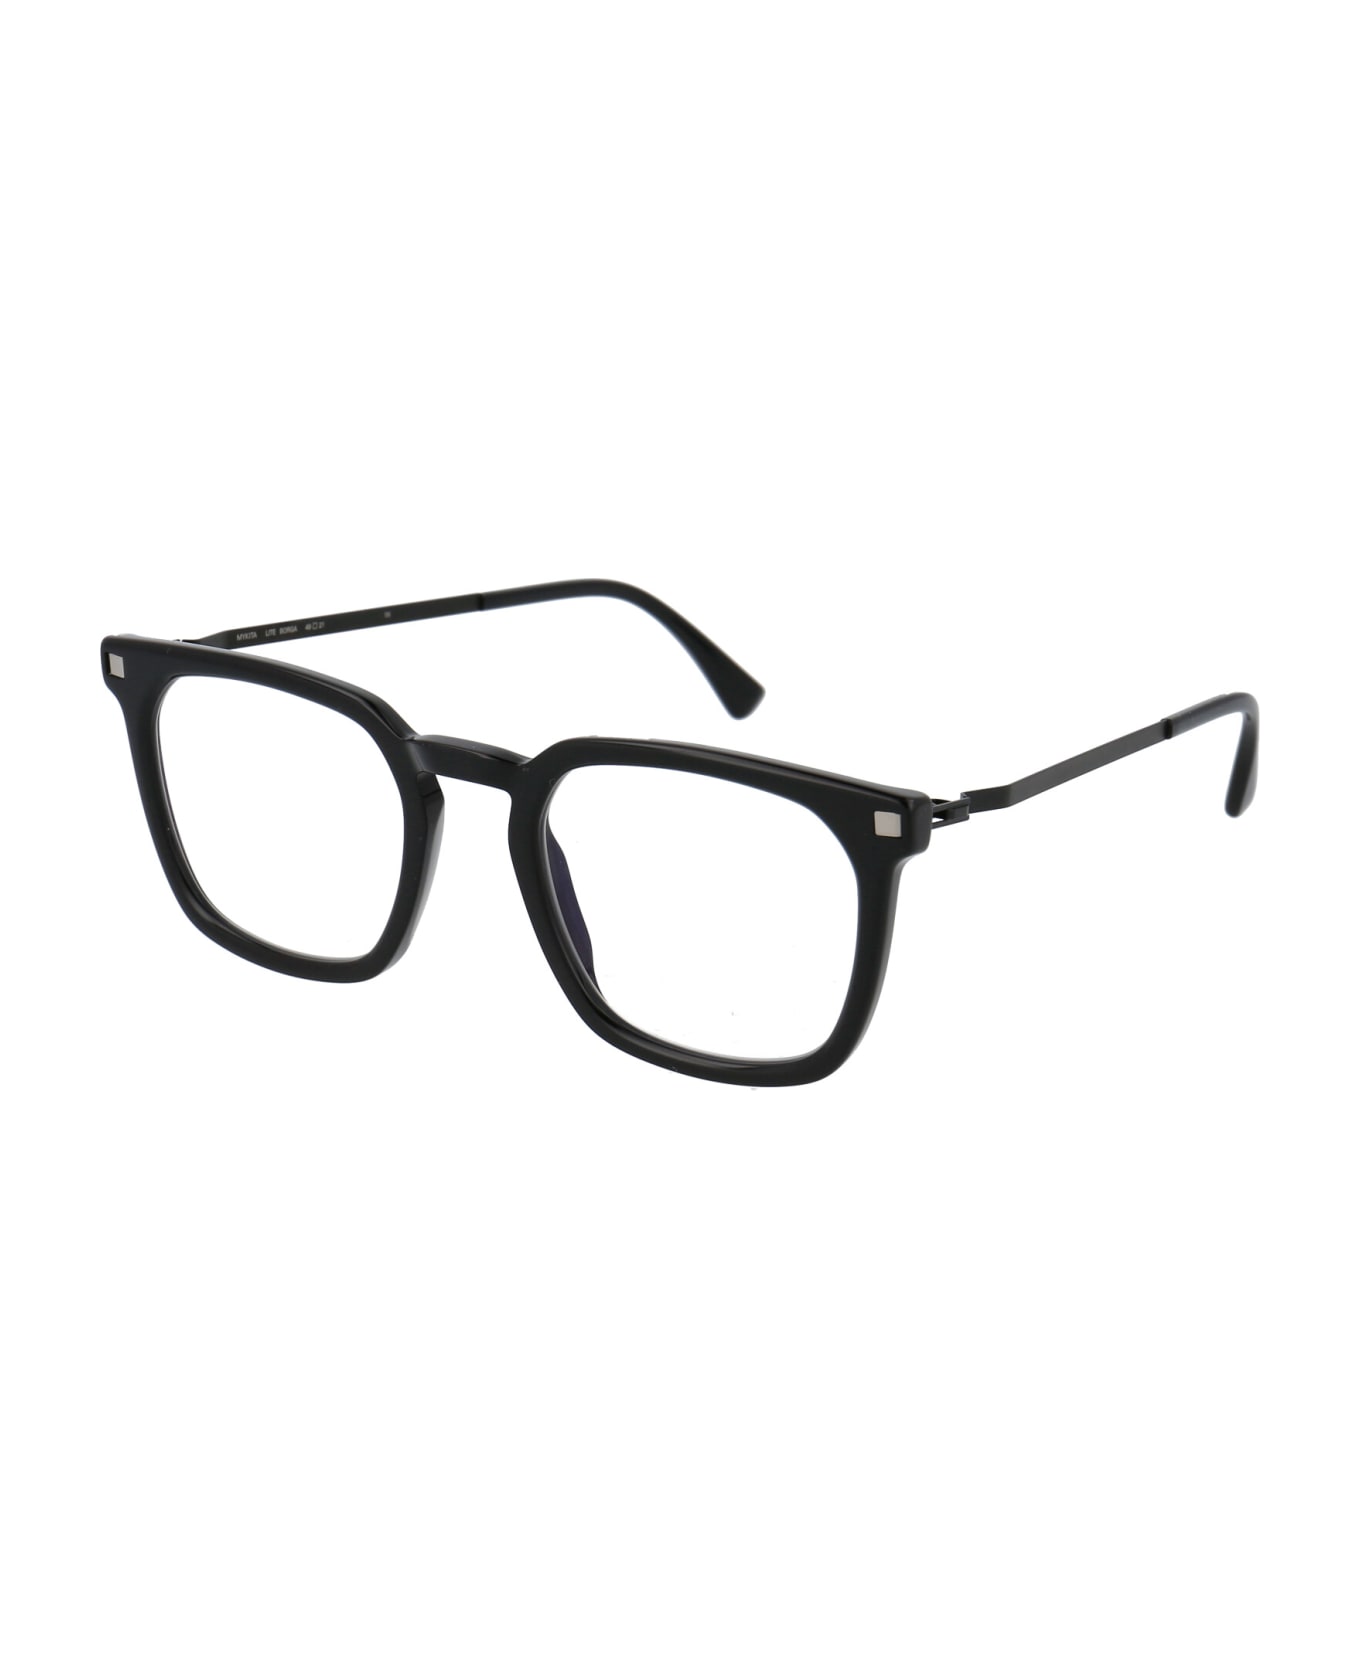 Mykita Borga Glasses - 877 C95 Black/Silver/Black Clear アイウェア